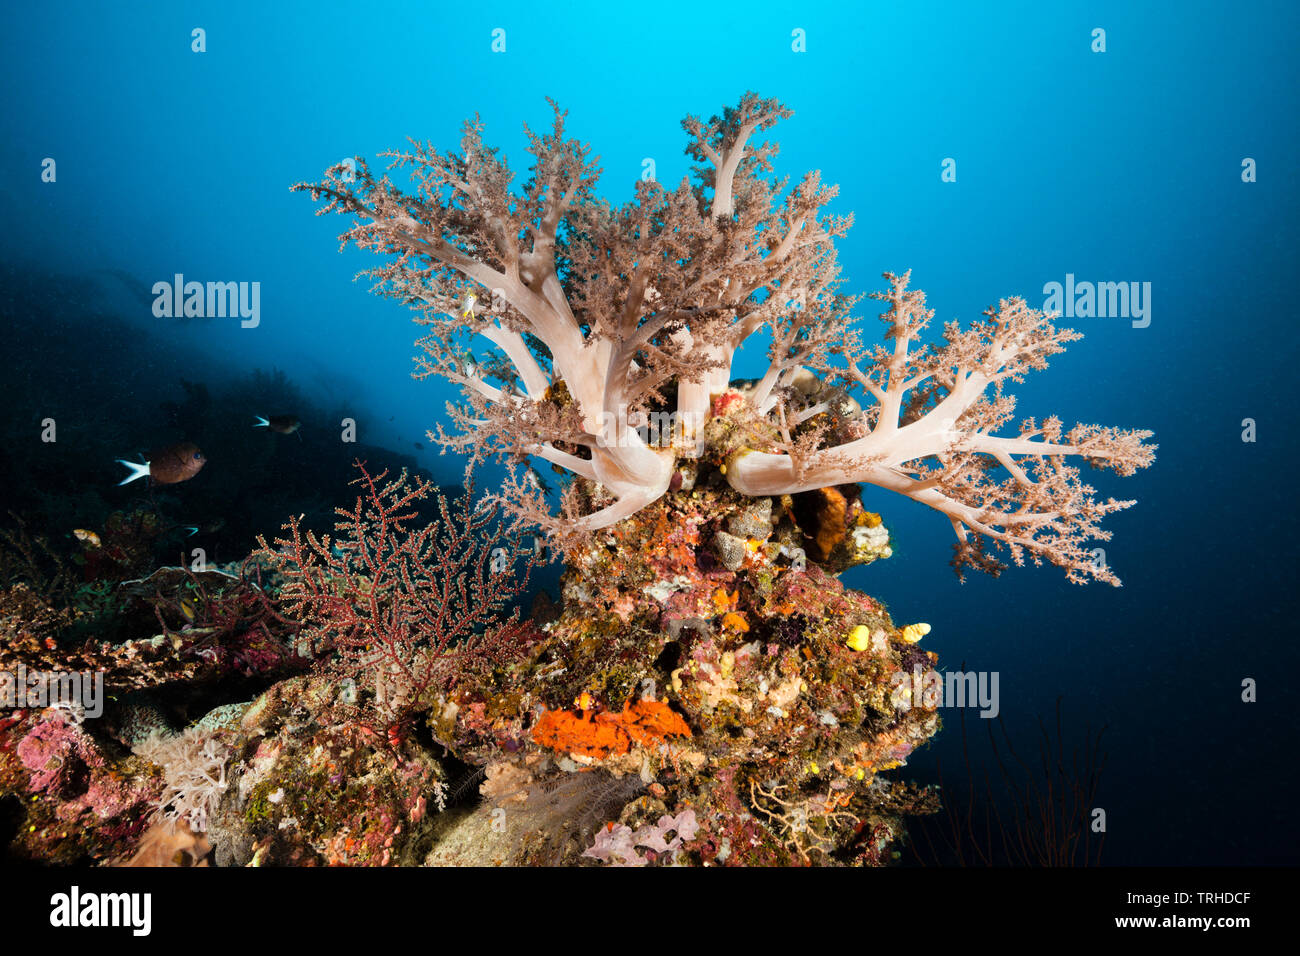 Broccoli Soft Coral on Coral Reef, Litophyton arboreum, Tufi, Solomon Sea, Papua New Guinea Stock Photo